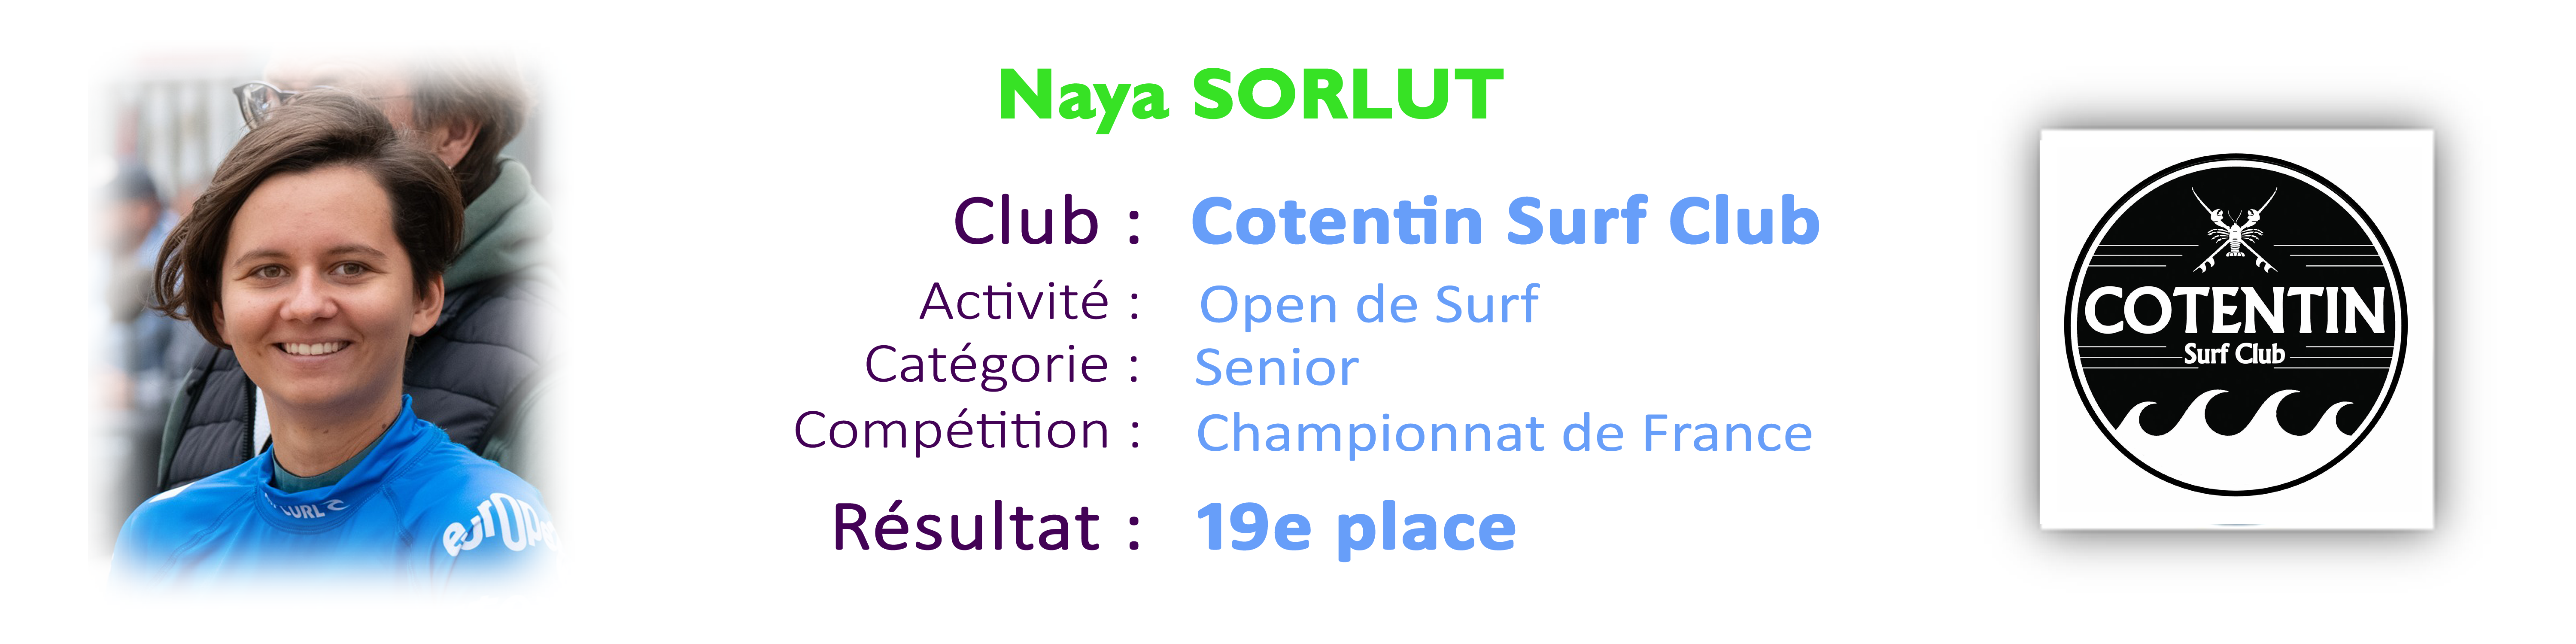 T.Indiv Femme L4 - Cotentin Surf Club